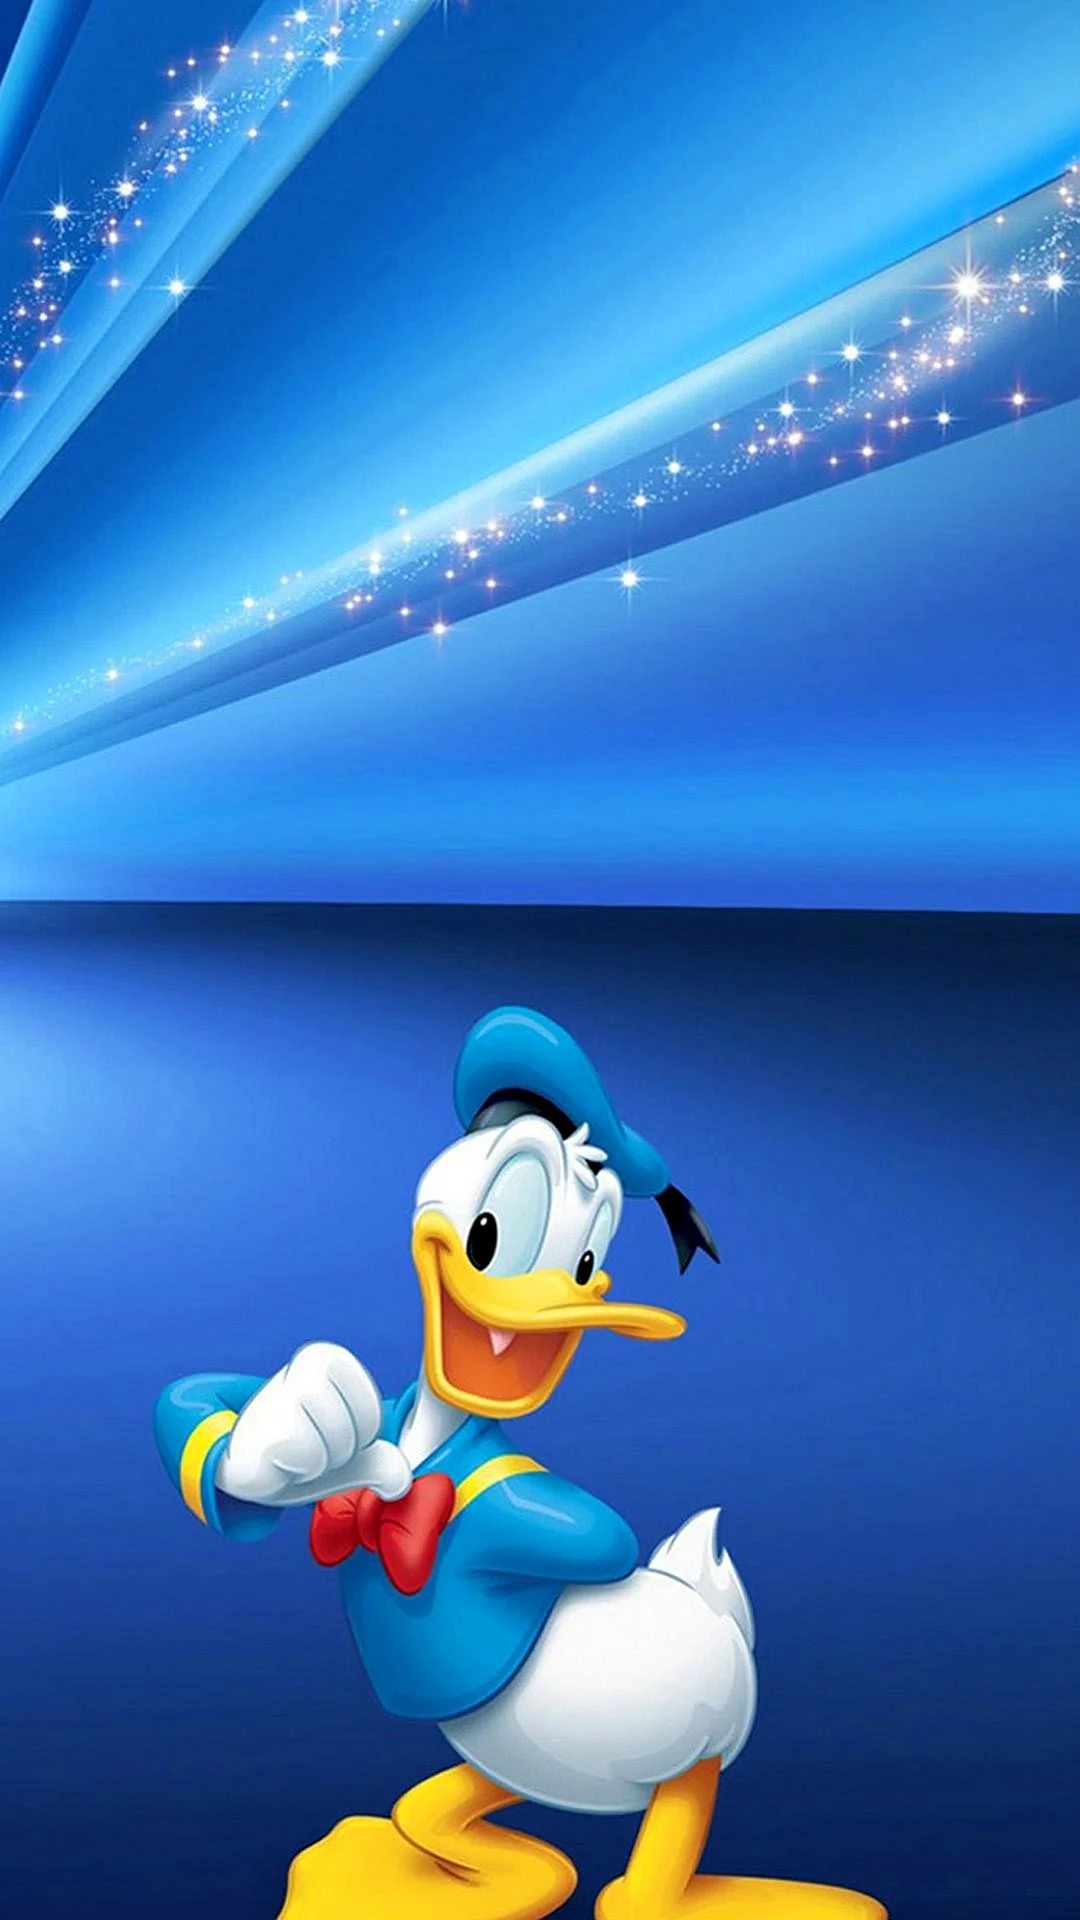 Disney Donald Duck Wallpaper For iPhone